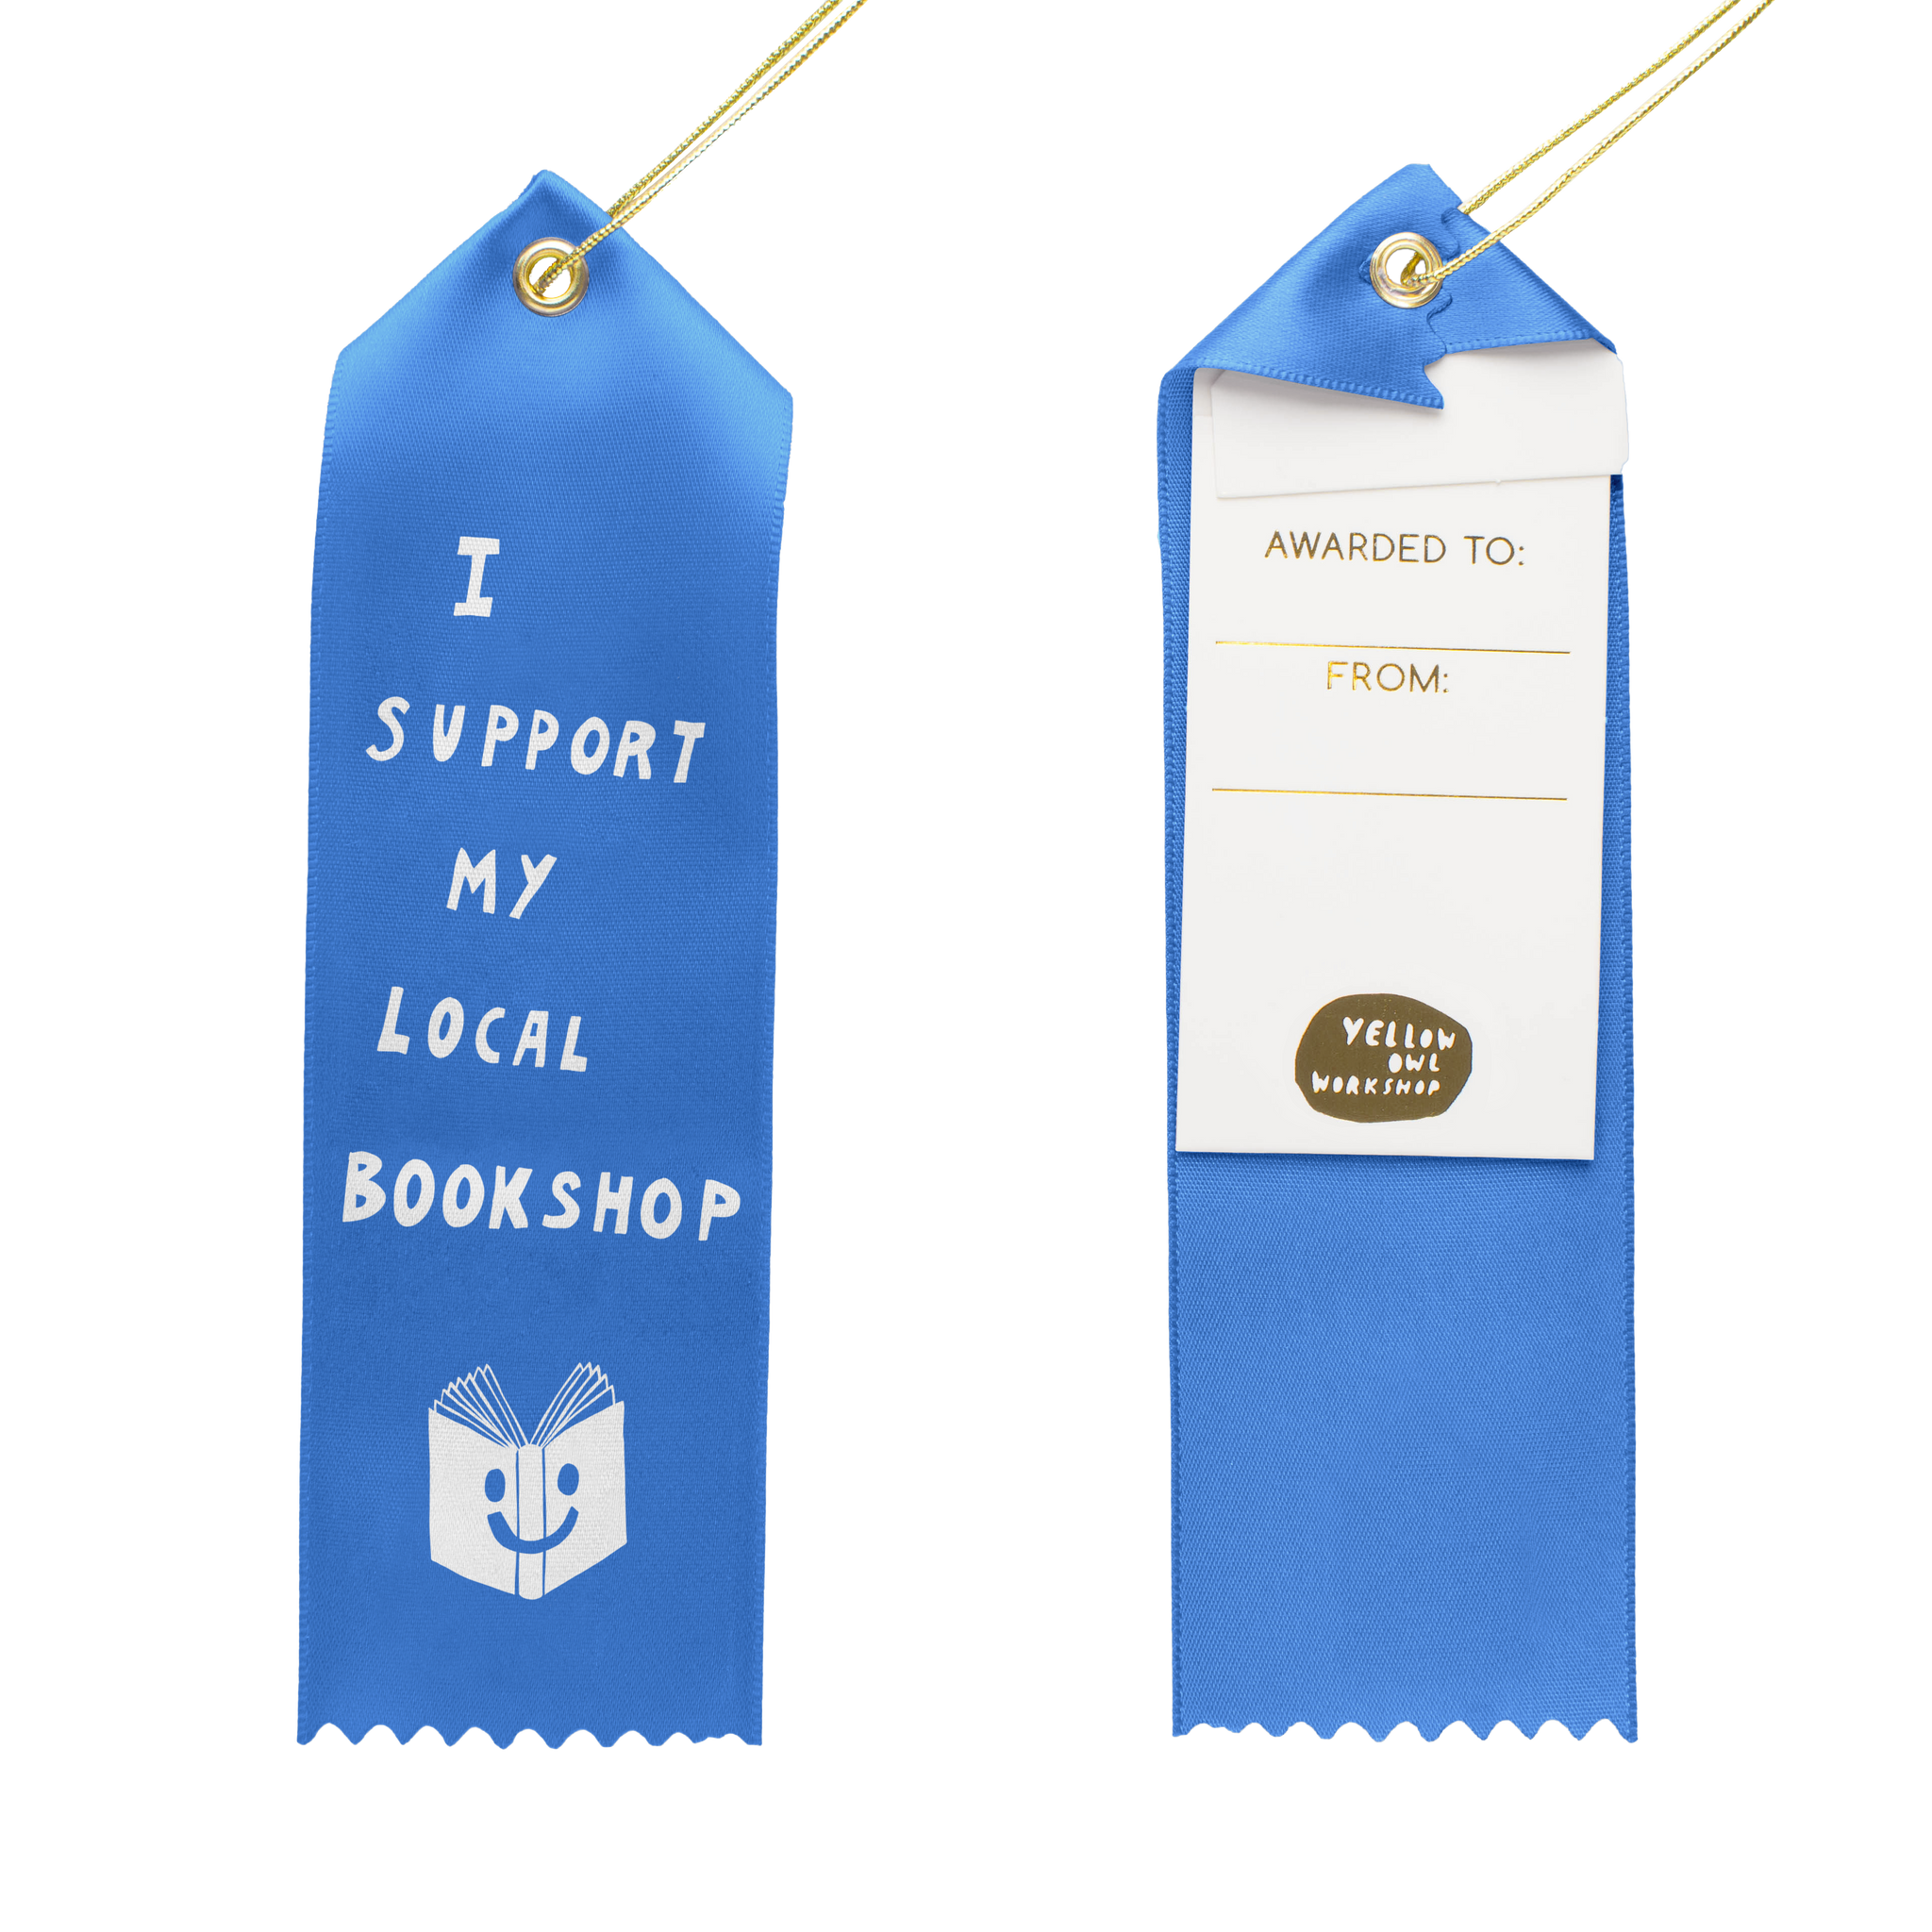 "I Support My Local Bookshop" Award Ribbon